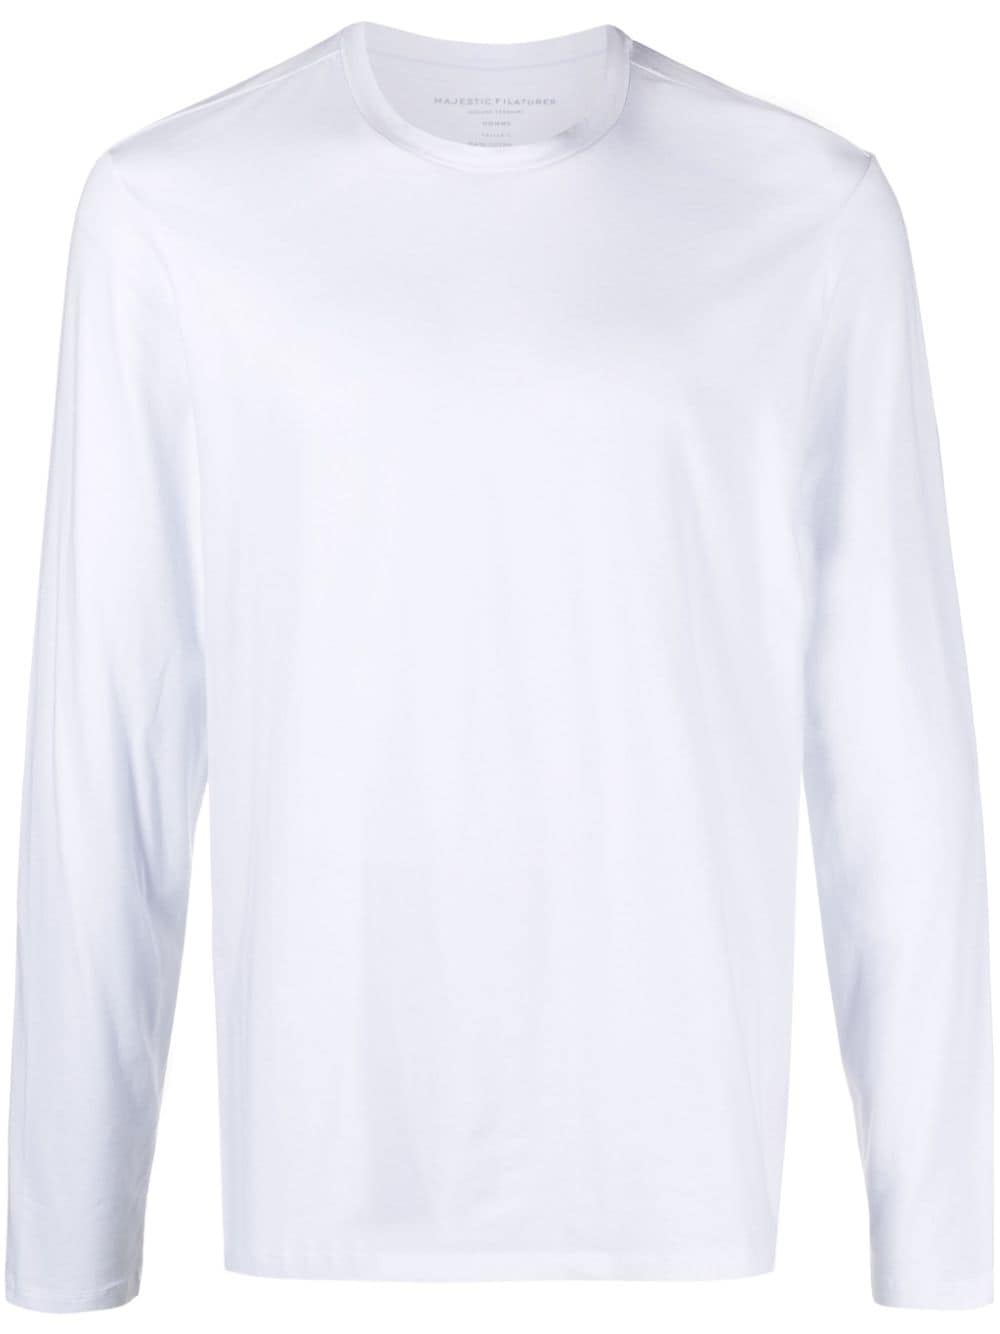 Majestic Filatures long-sleeve cotton T-shirt - White von Majestic Filatures